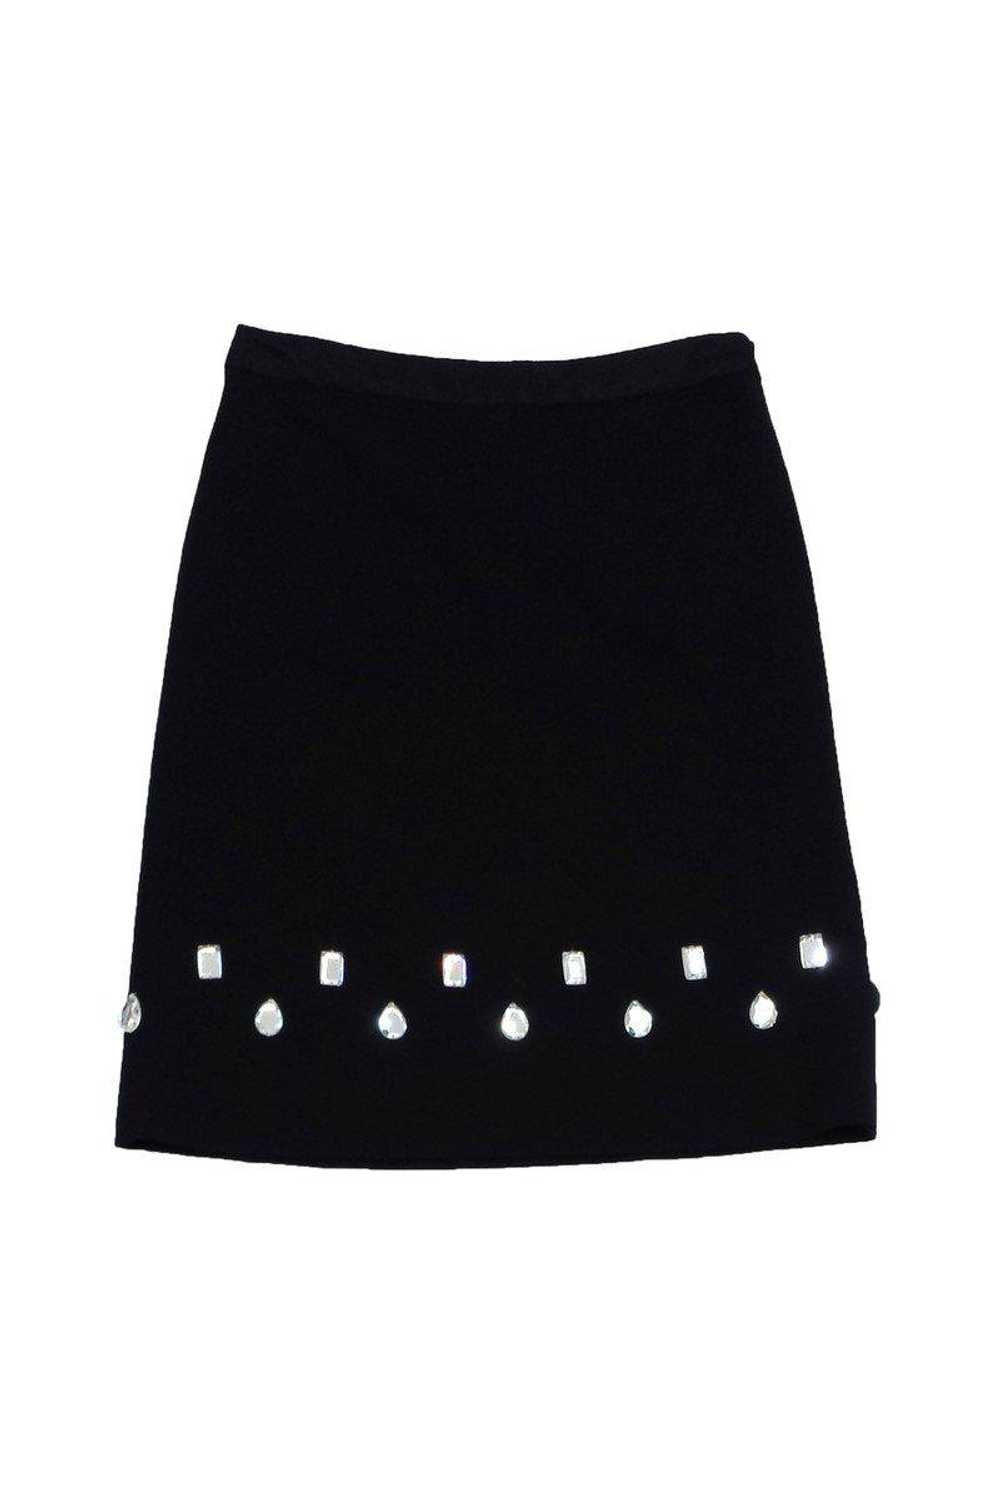 Tracy Reese - Black Wool Embellished Skirt Sz 4 - image 1